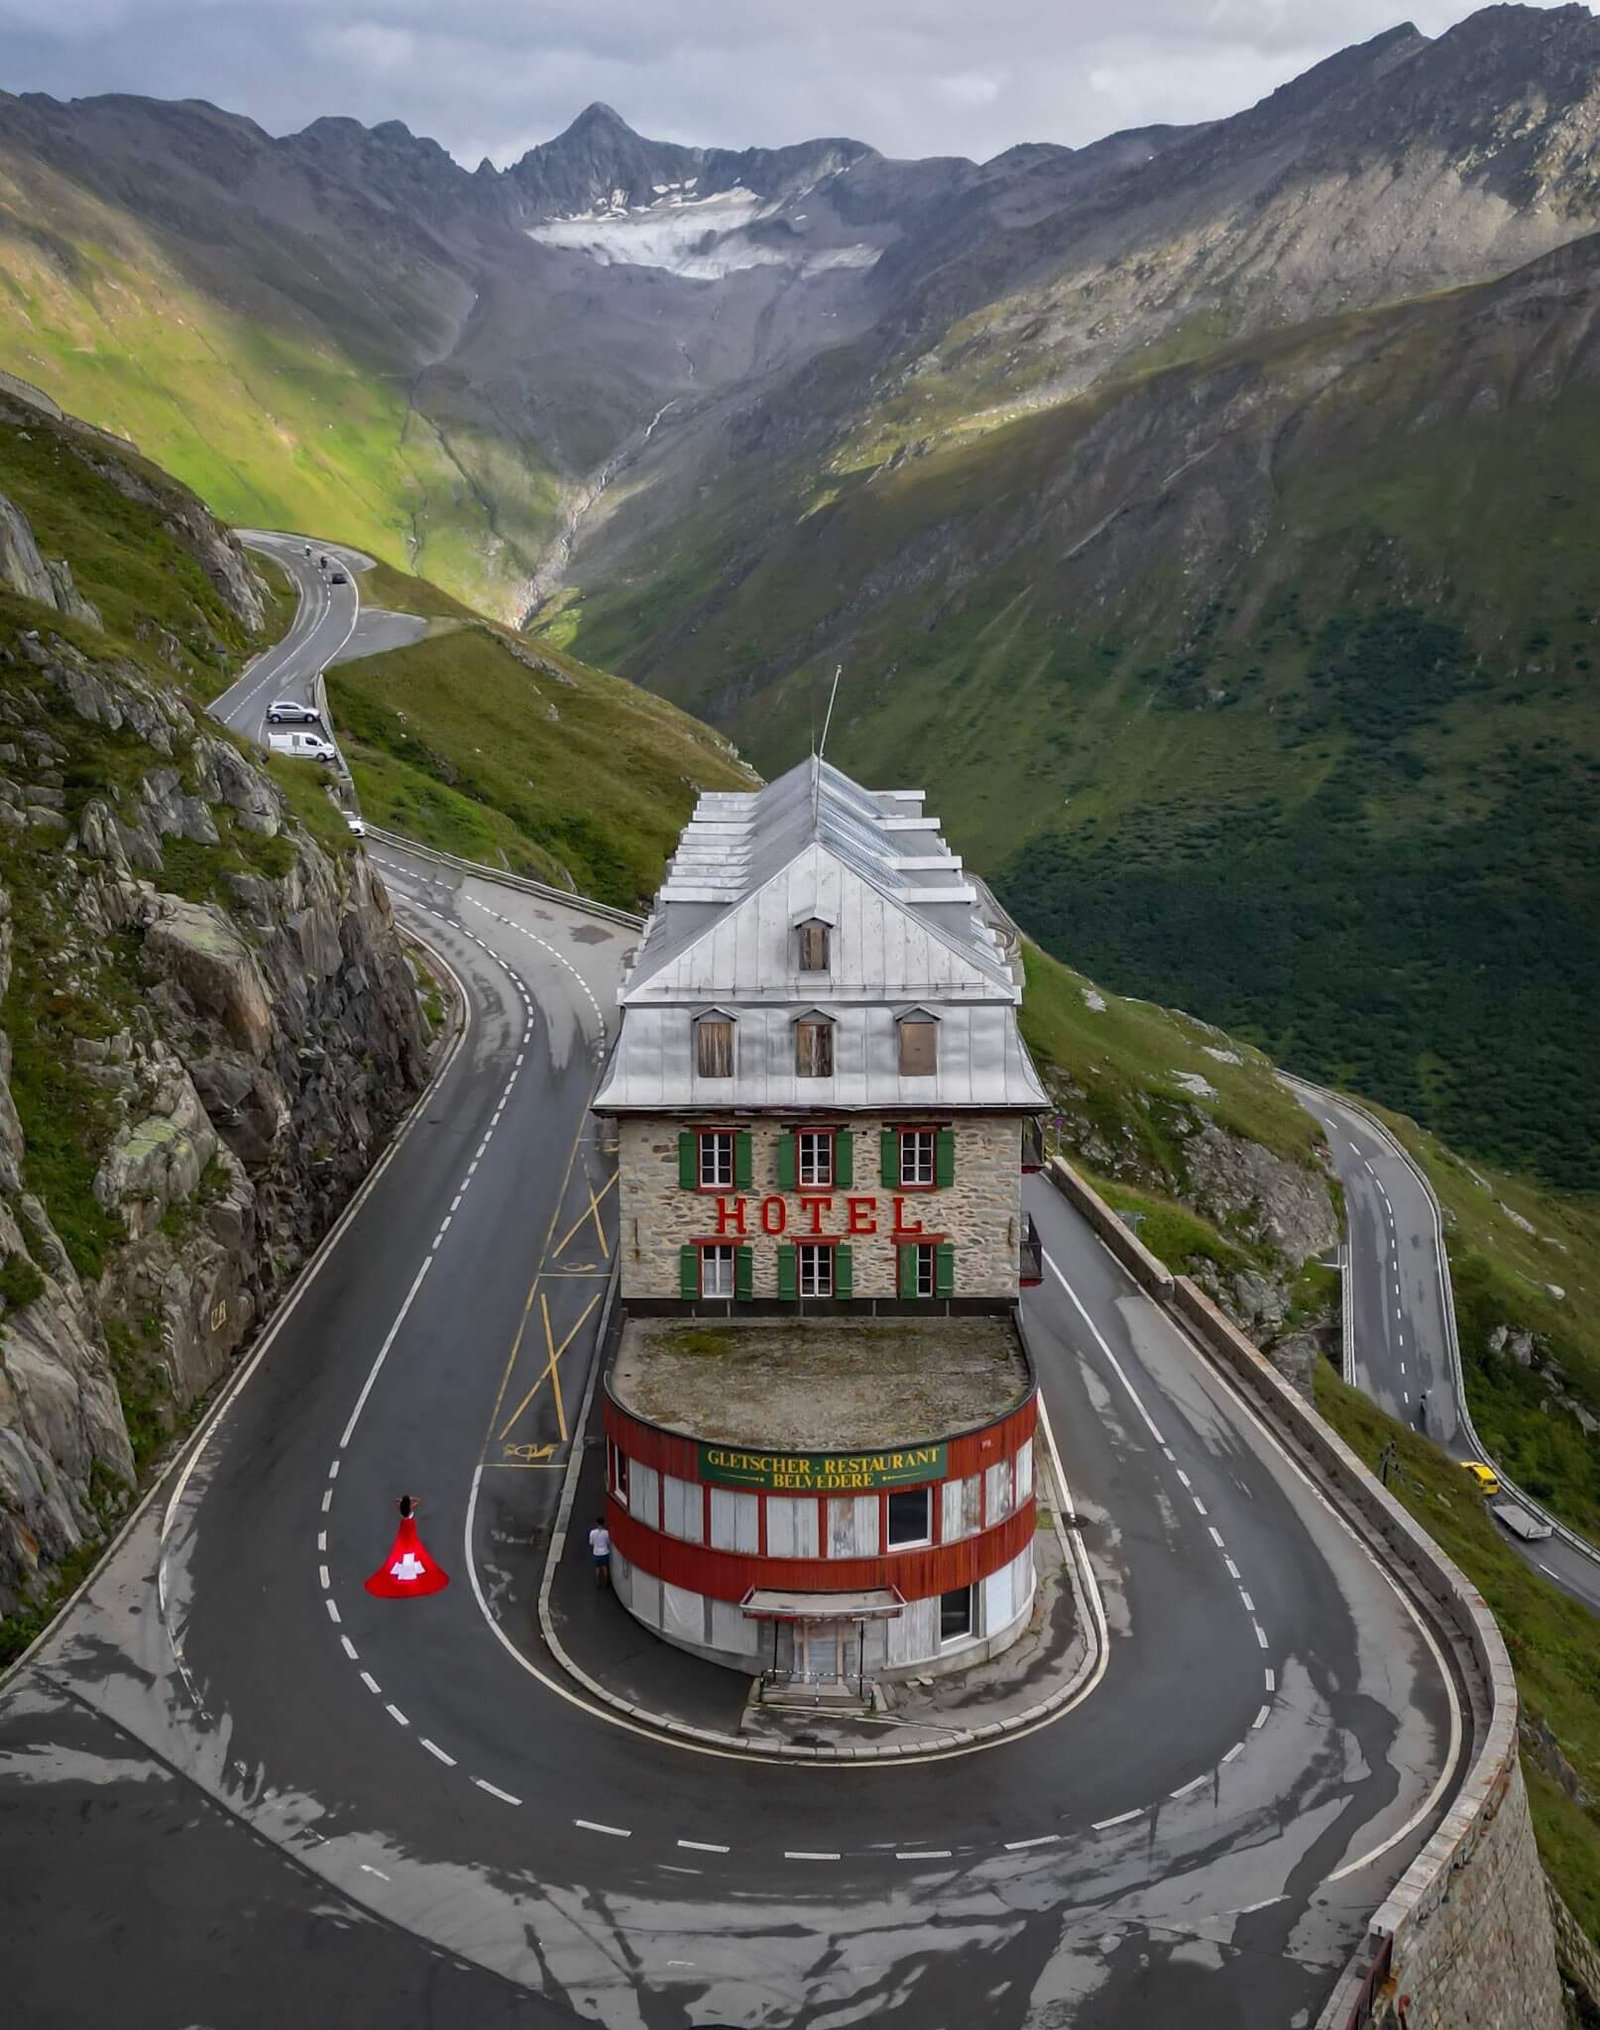 abandonded hotel in Switzerland